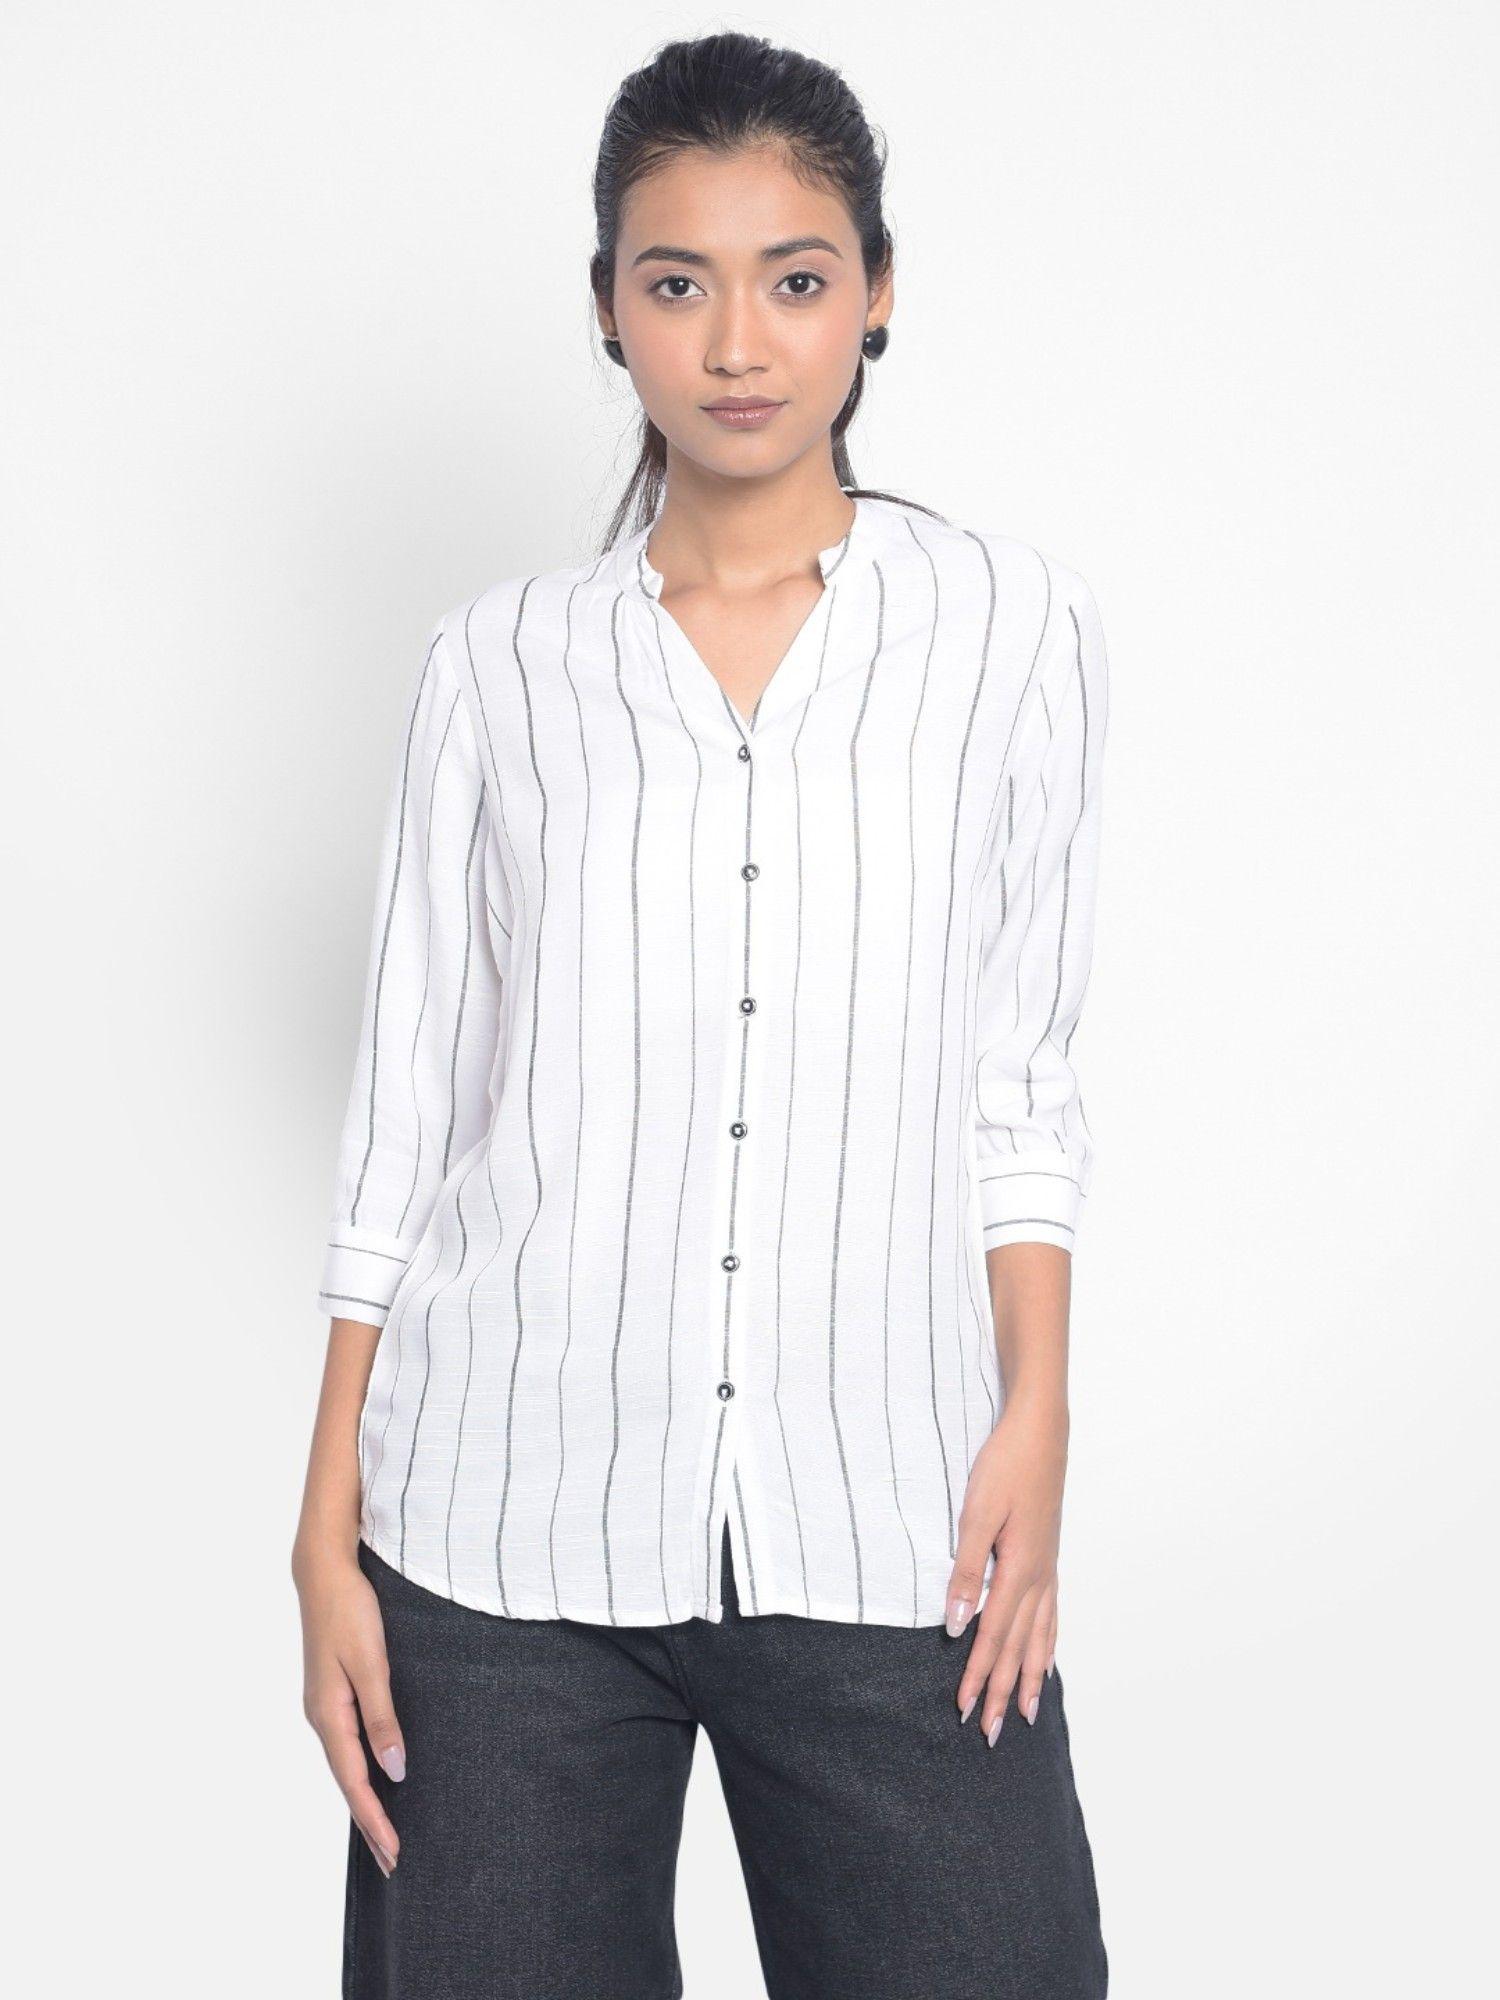 women's white striped shirt